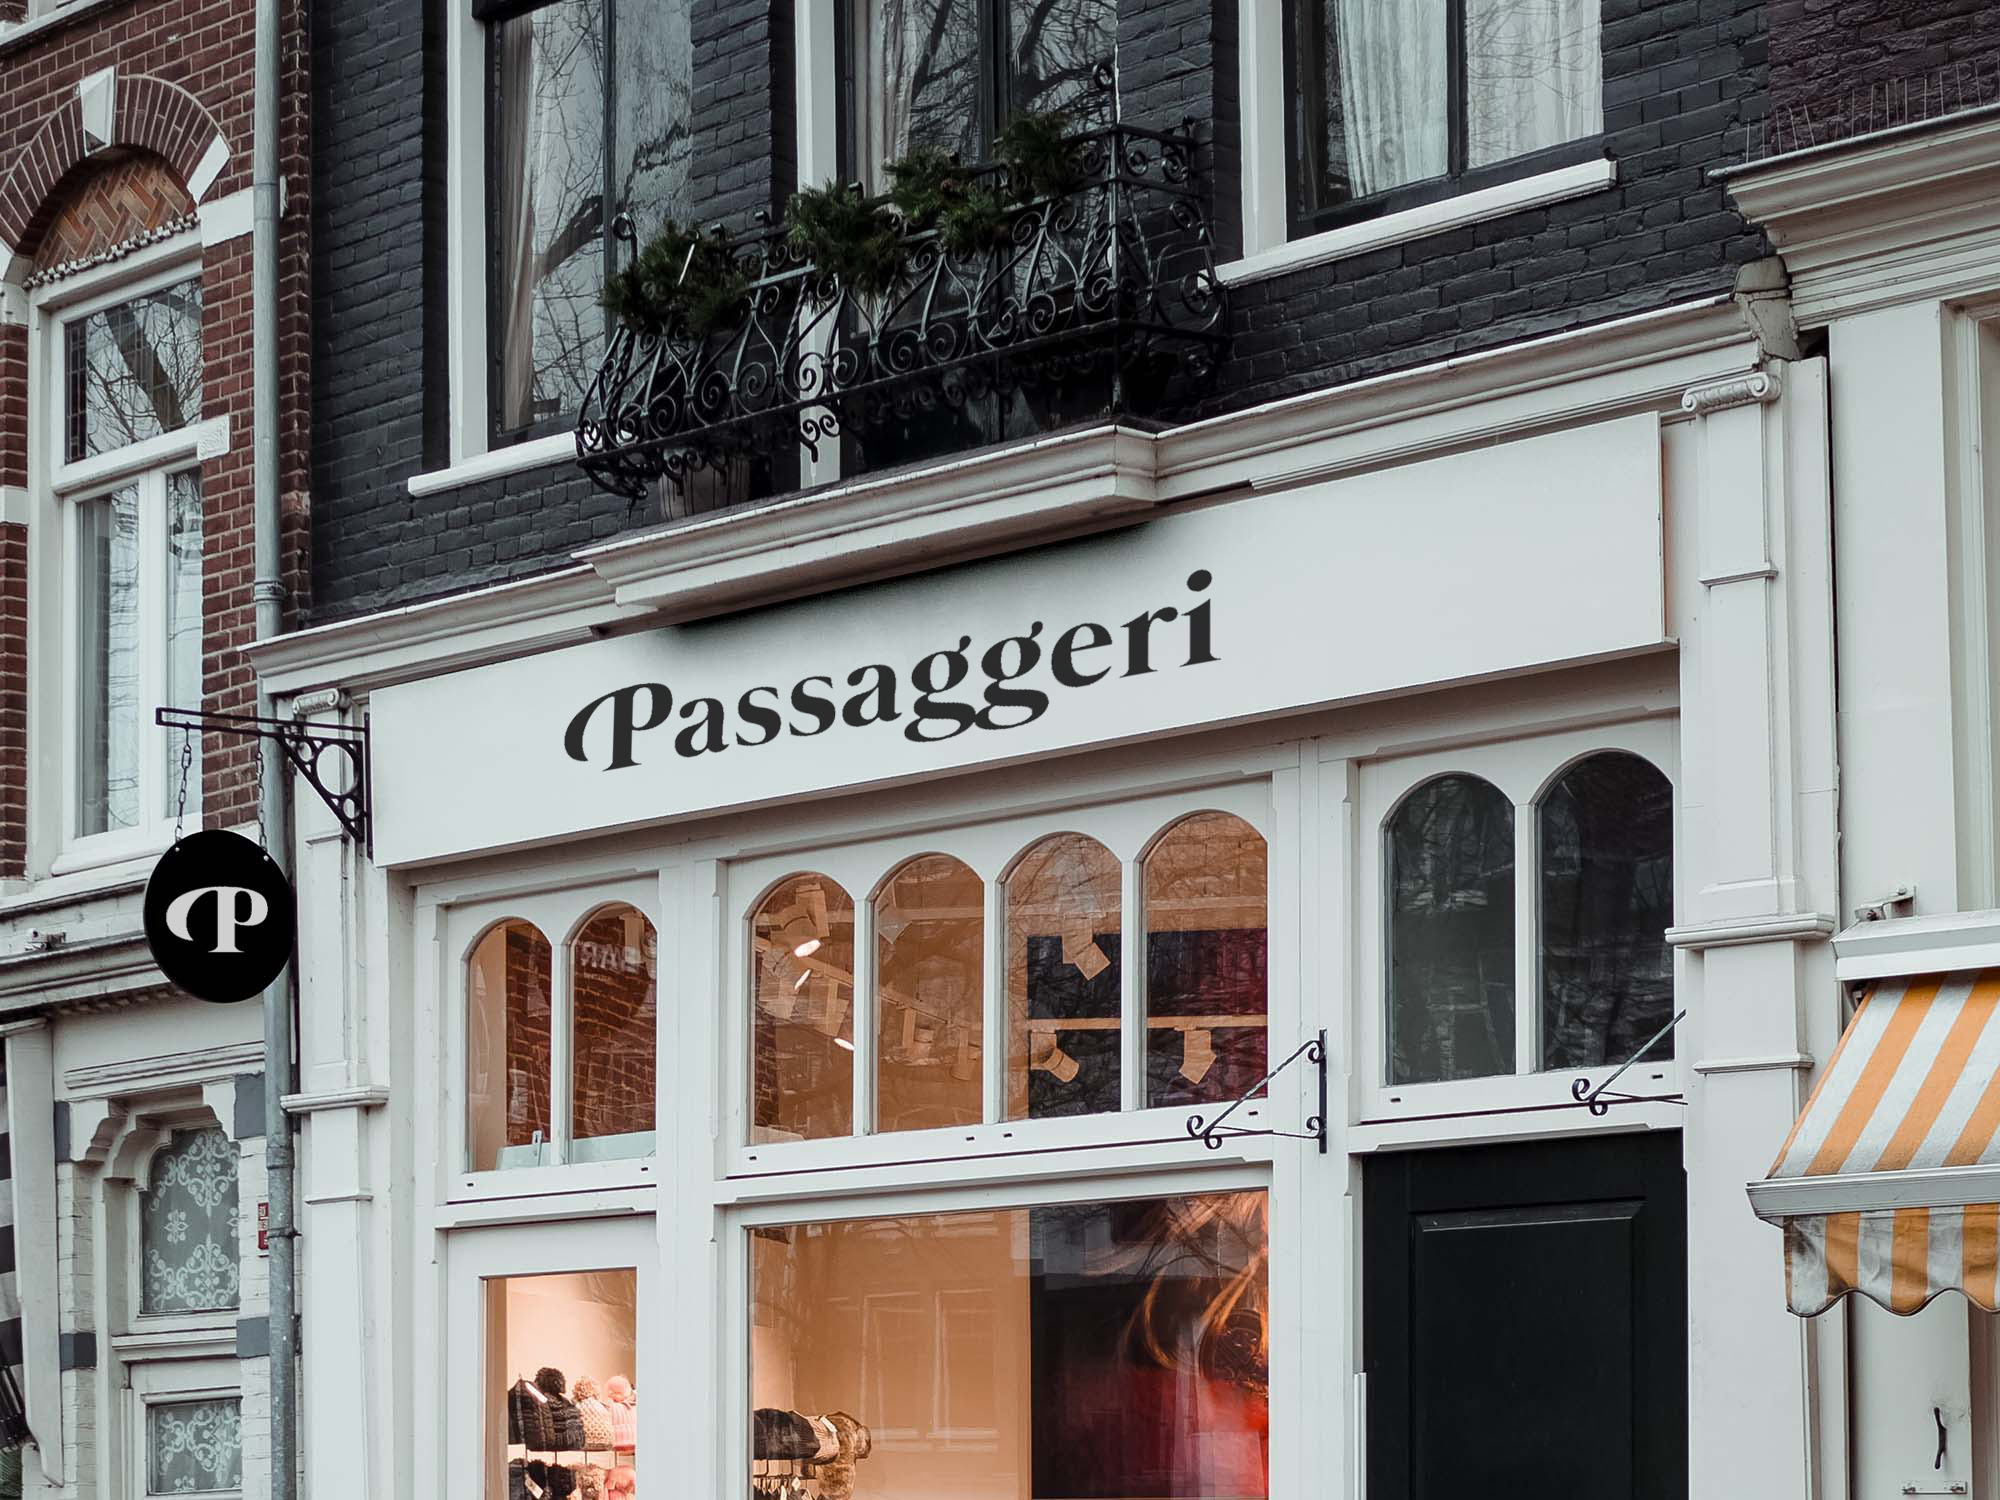 Passaggeri shop